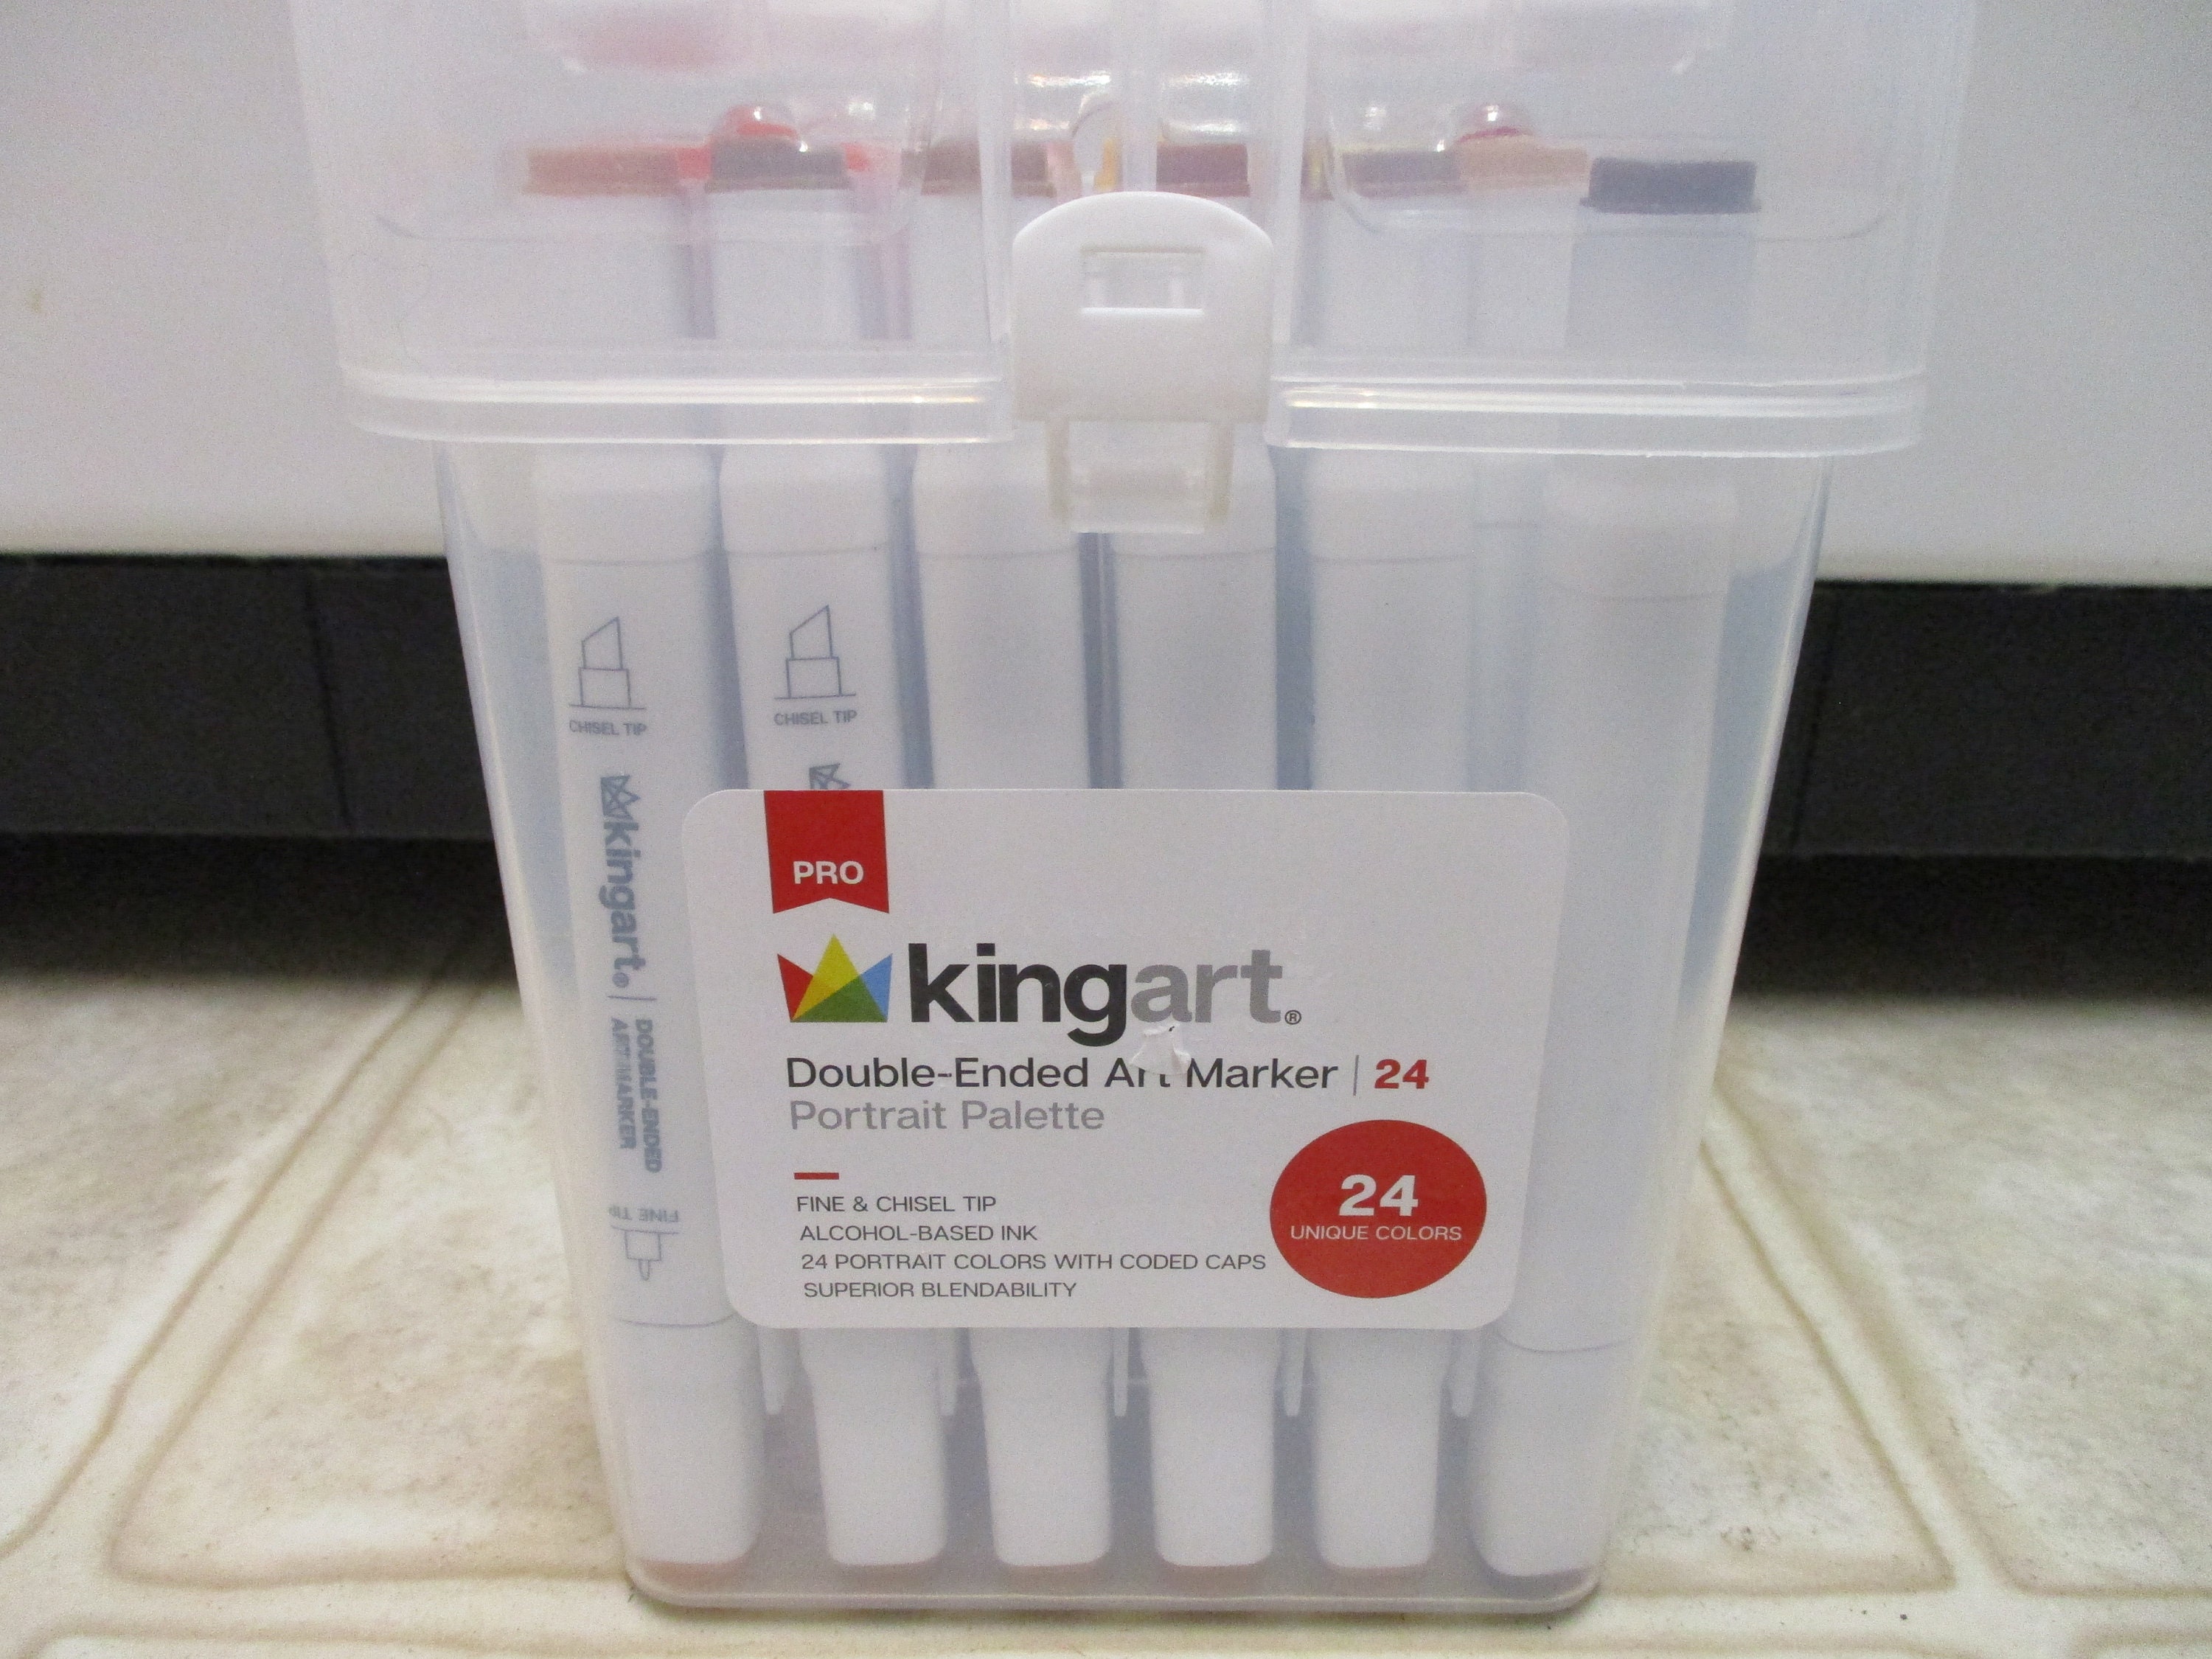 Kingart Pro Double-Ended Art Alcohol Marker Sets